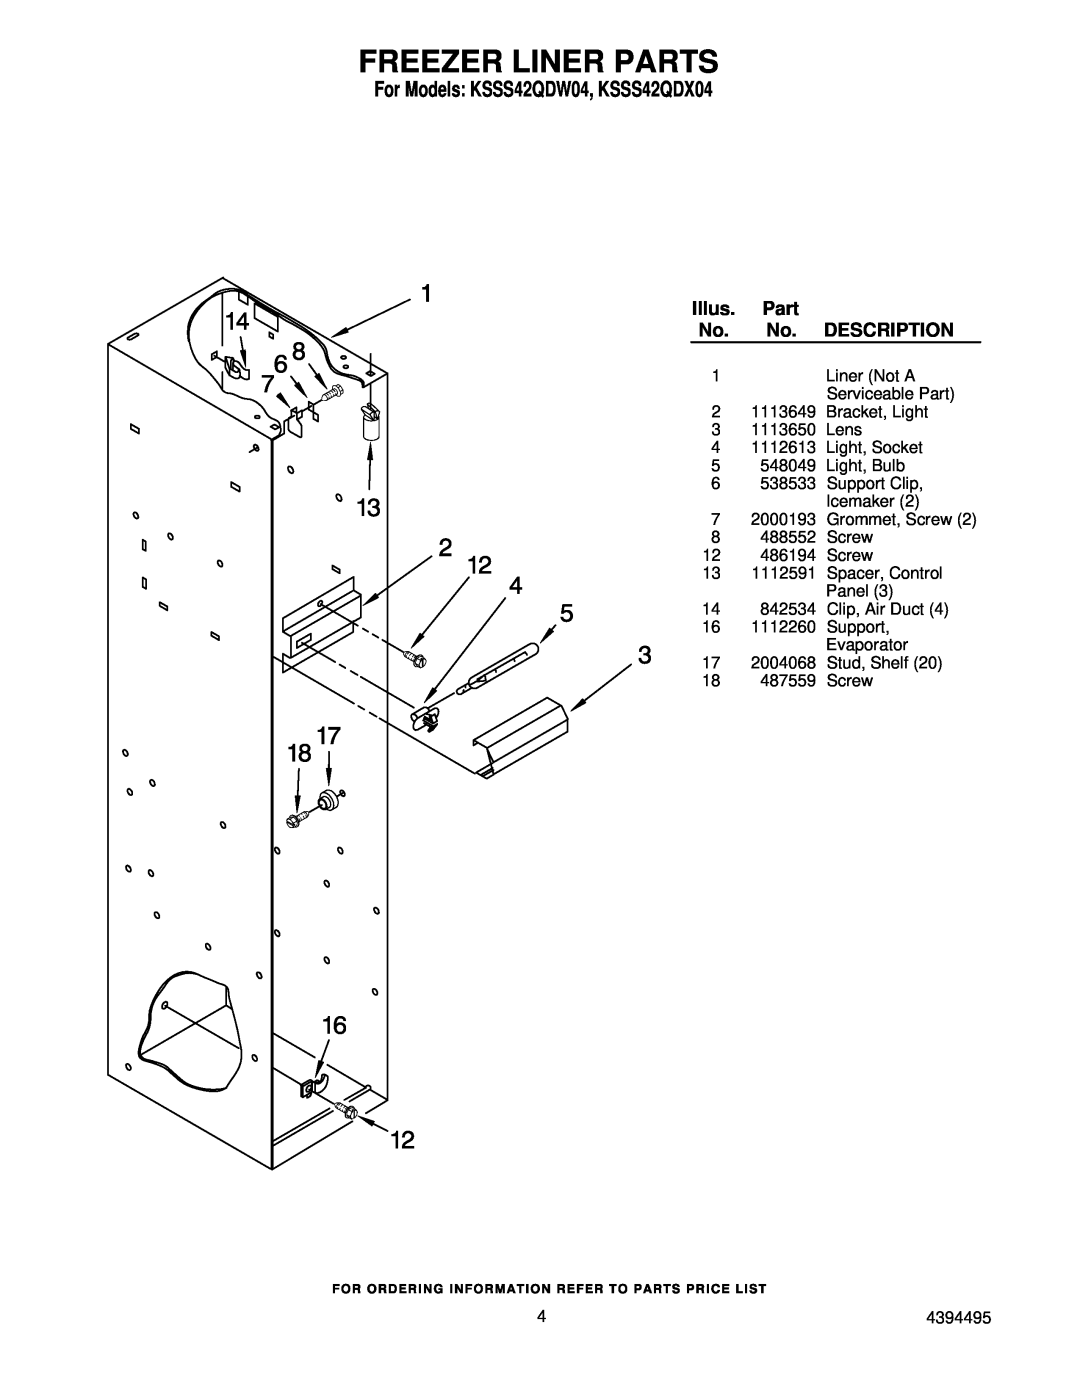 KitchenAid manual Freezer Liner Parts, For Models KSSS42QDW04, KSSS42QDX04, Illus, Description 